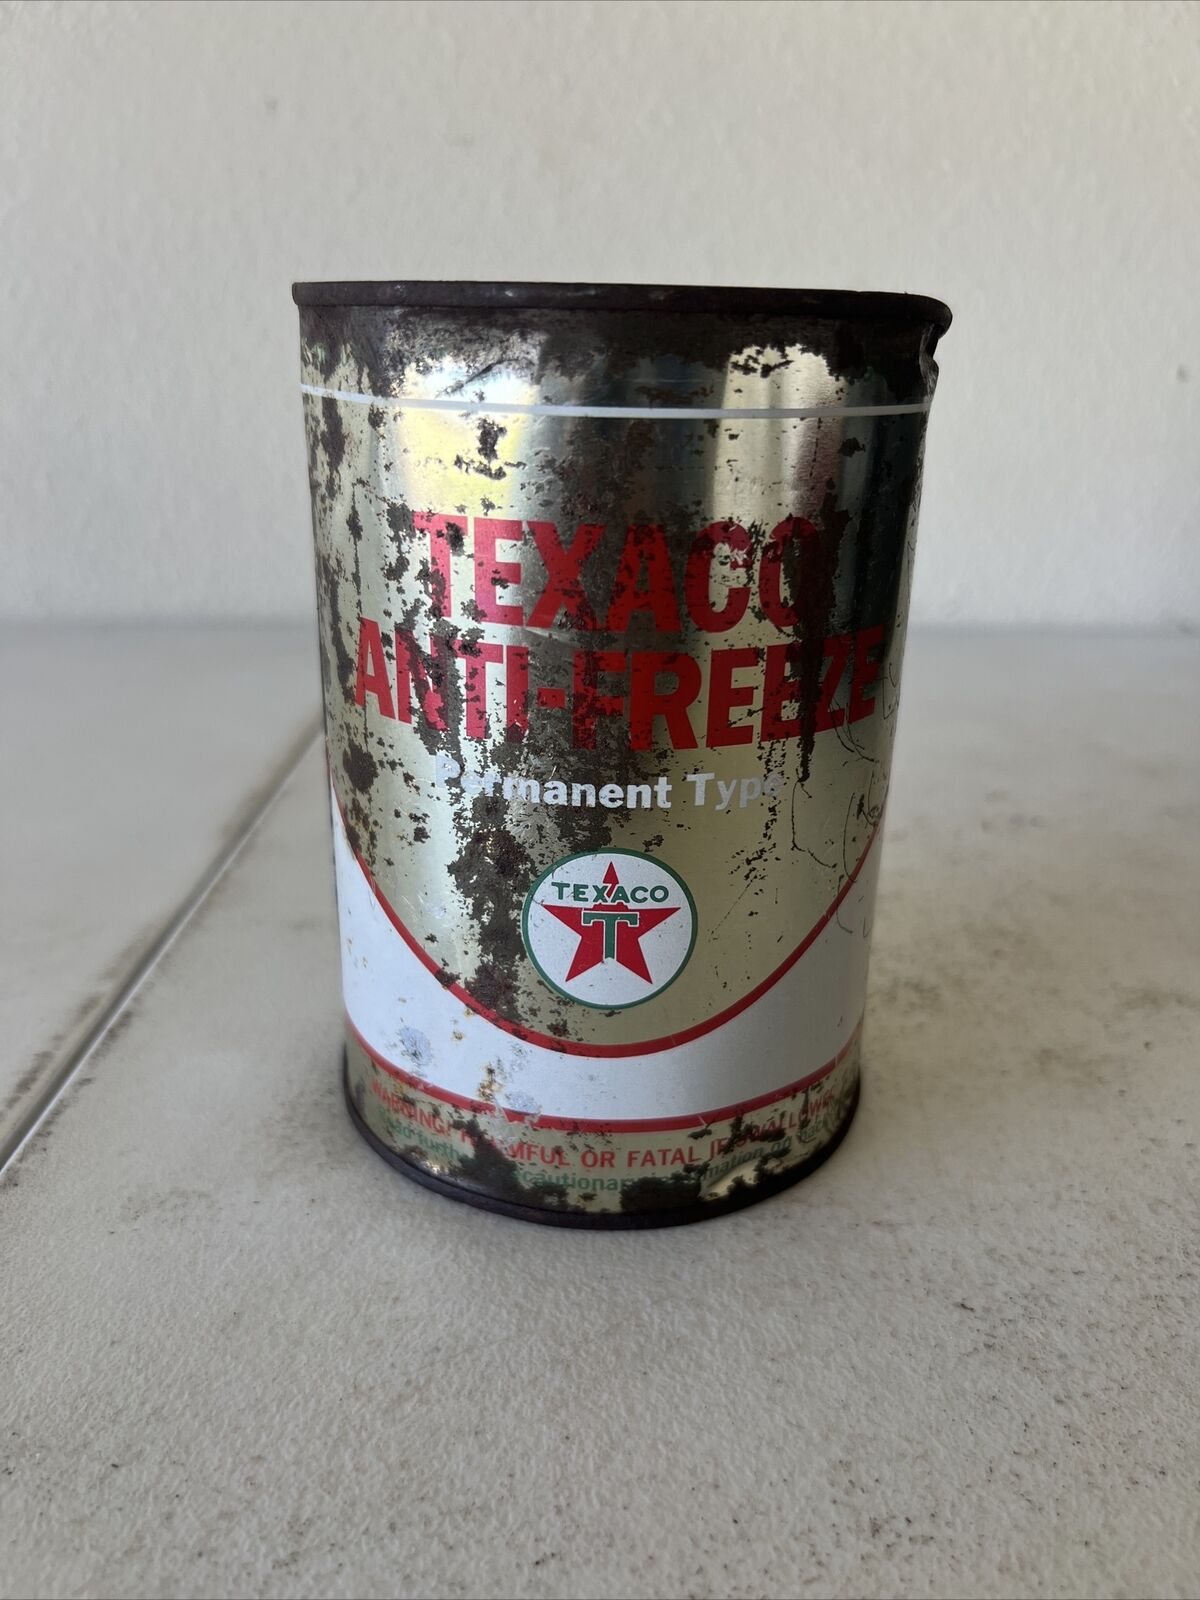 Vintage Texaco Antifreeze Permanent Type 1 Gallon Metal Oil Can NOS Full